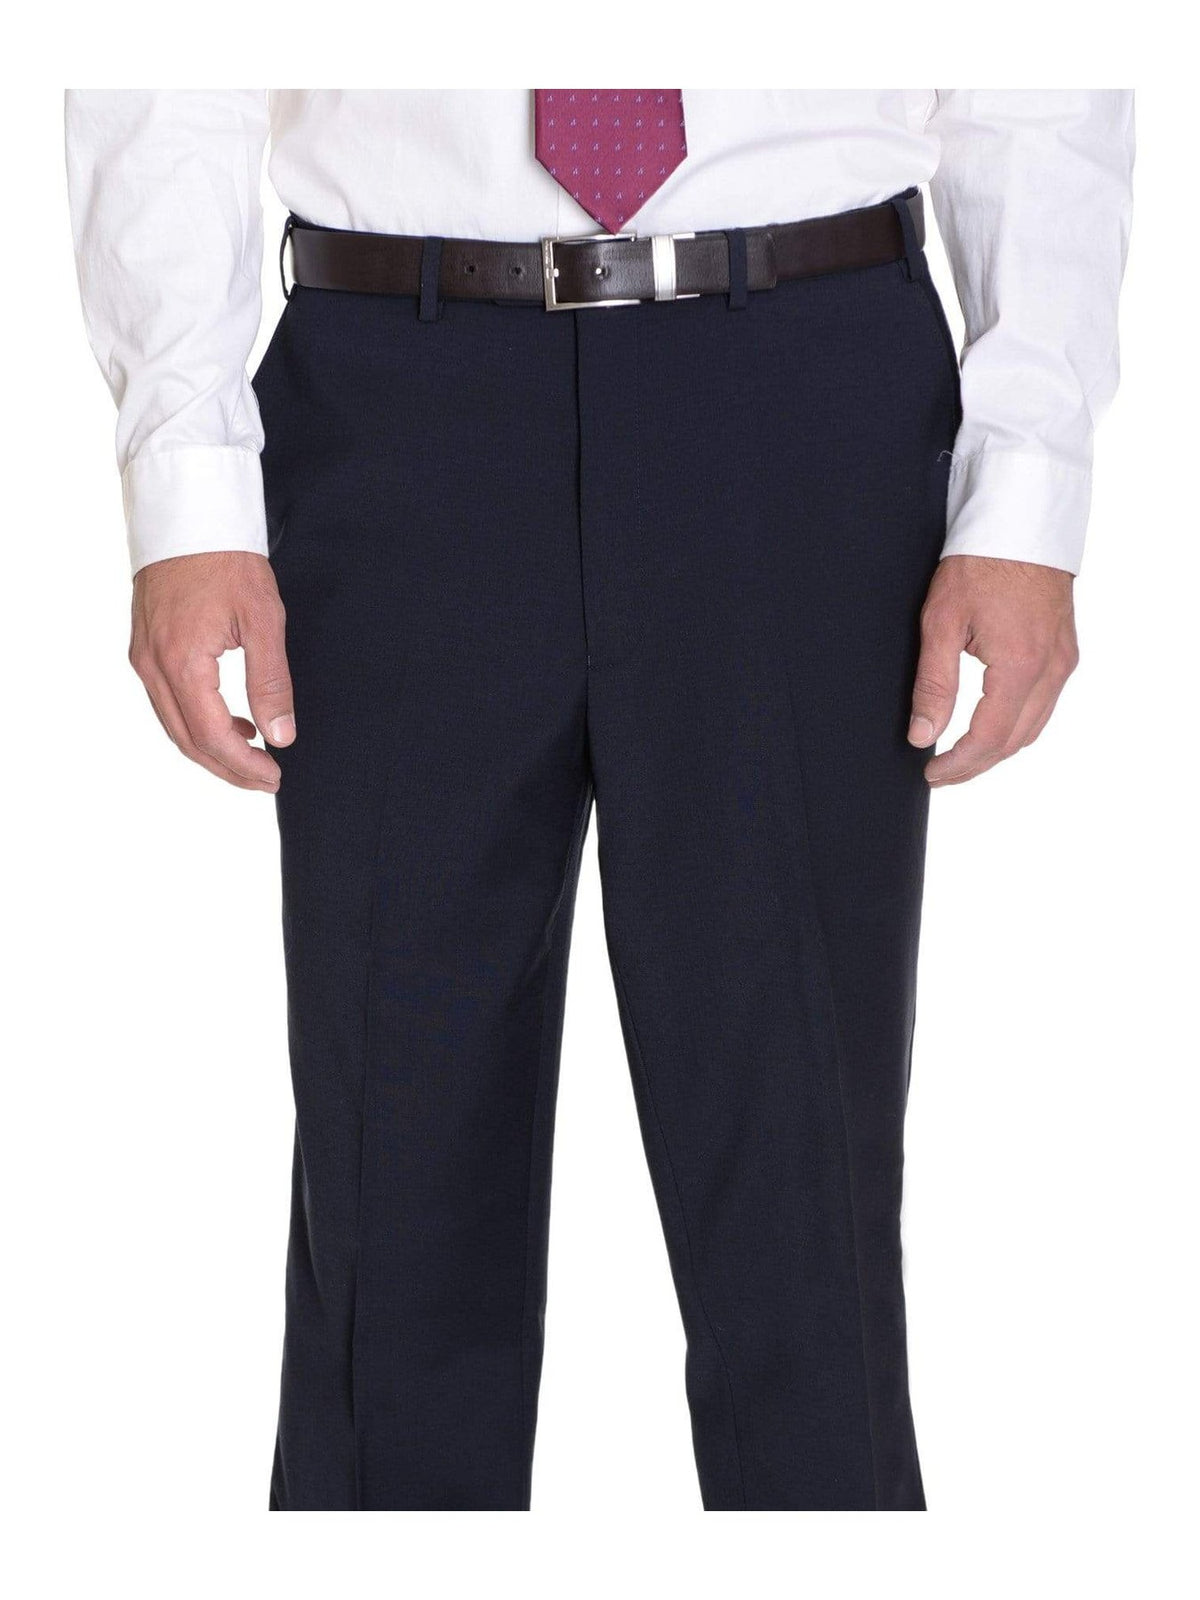 Label M PANTS 30W Mens Classic Fit Solid Navy Blue Flat Front Wool Dress Pants